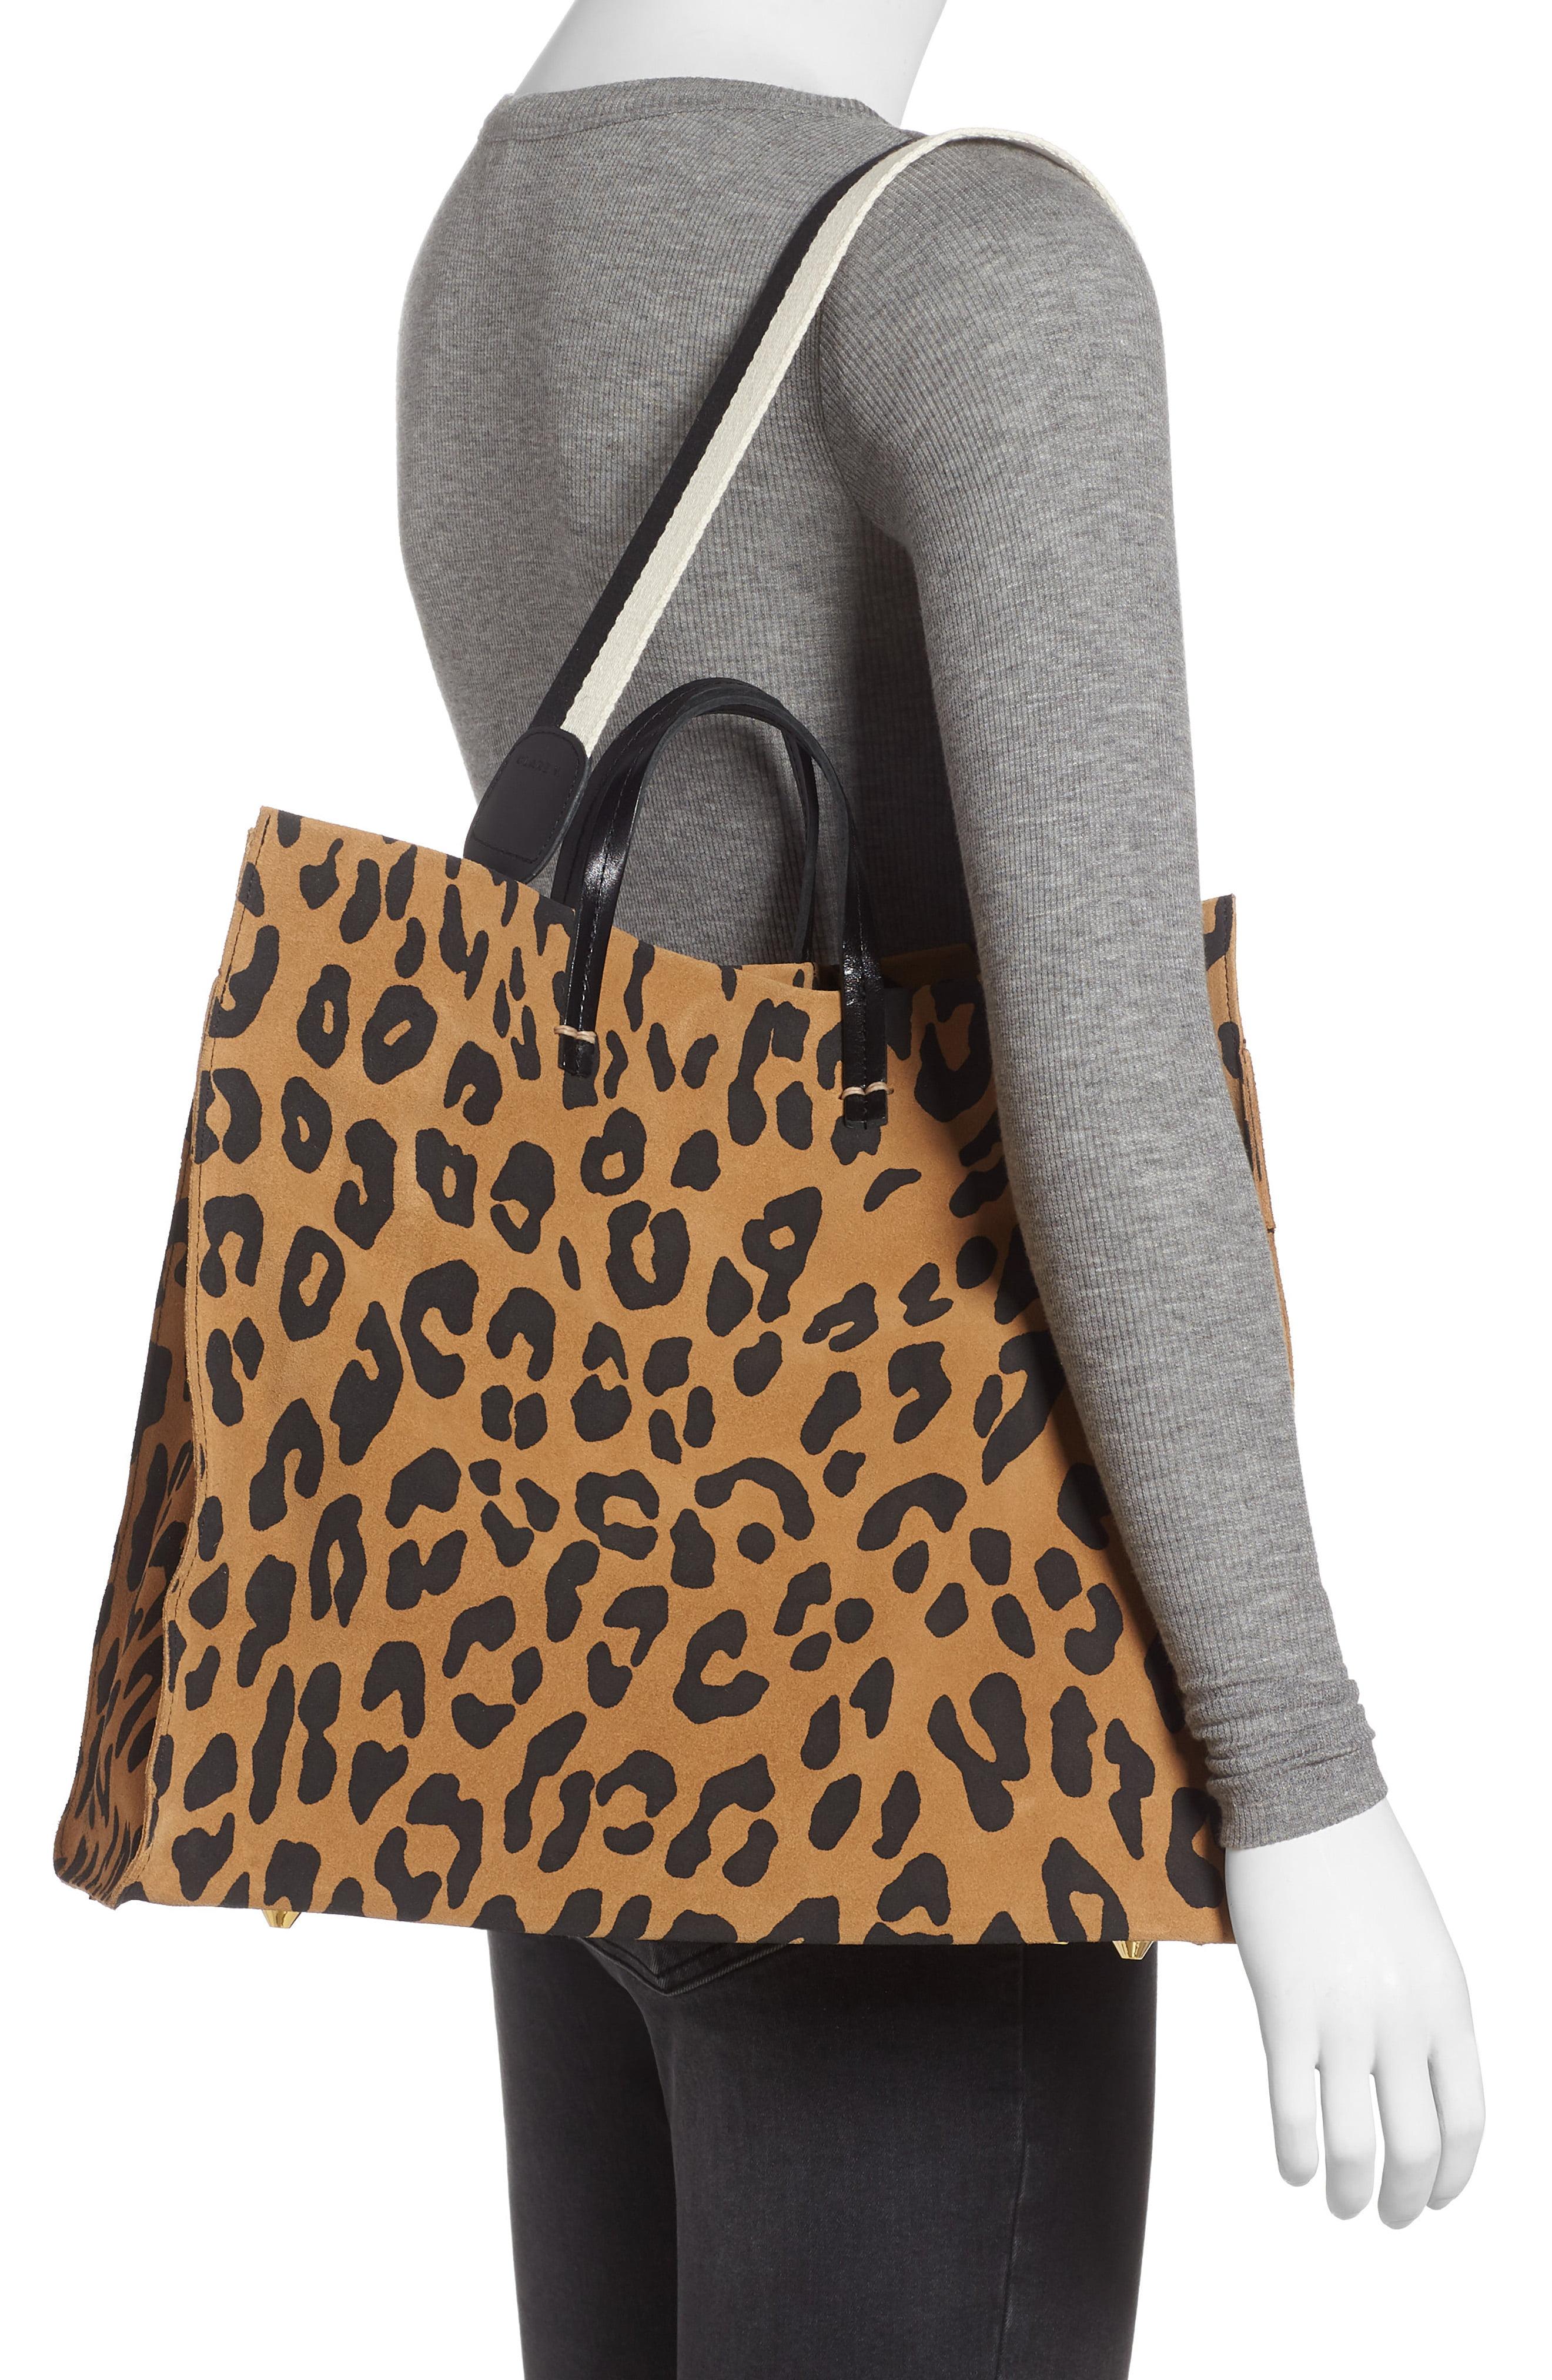 Clare V Helene bag in leopard print.